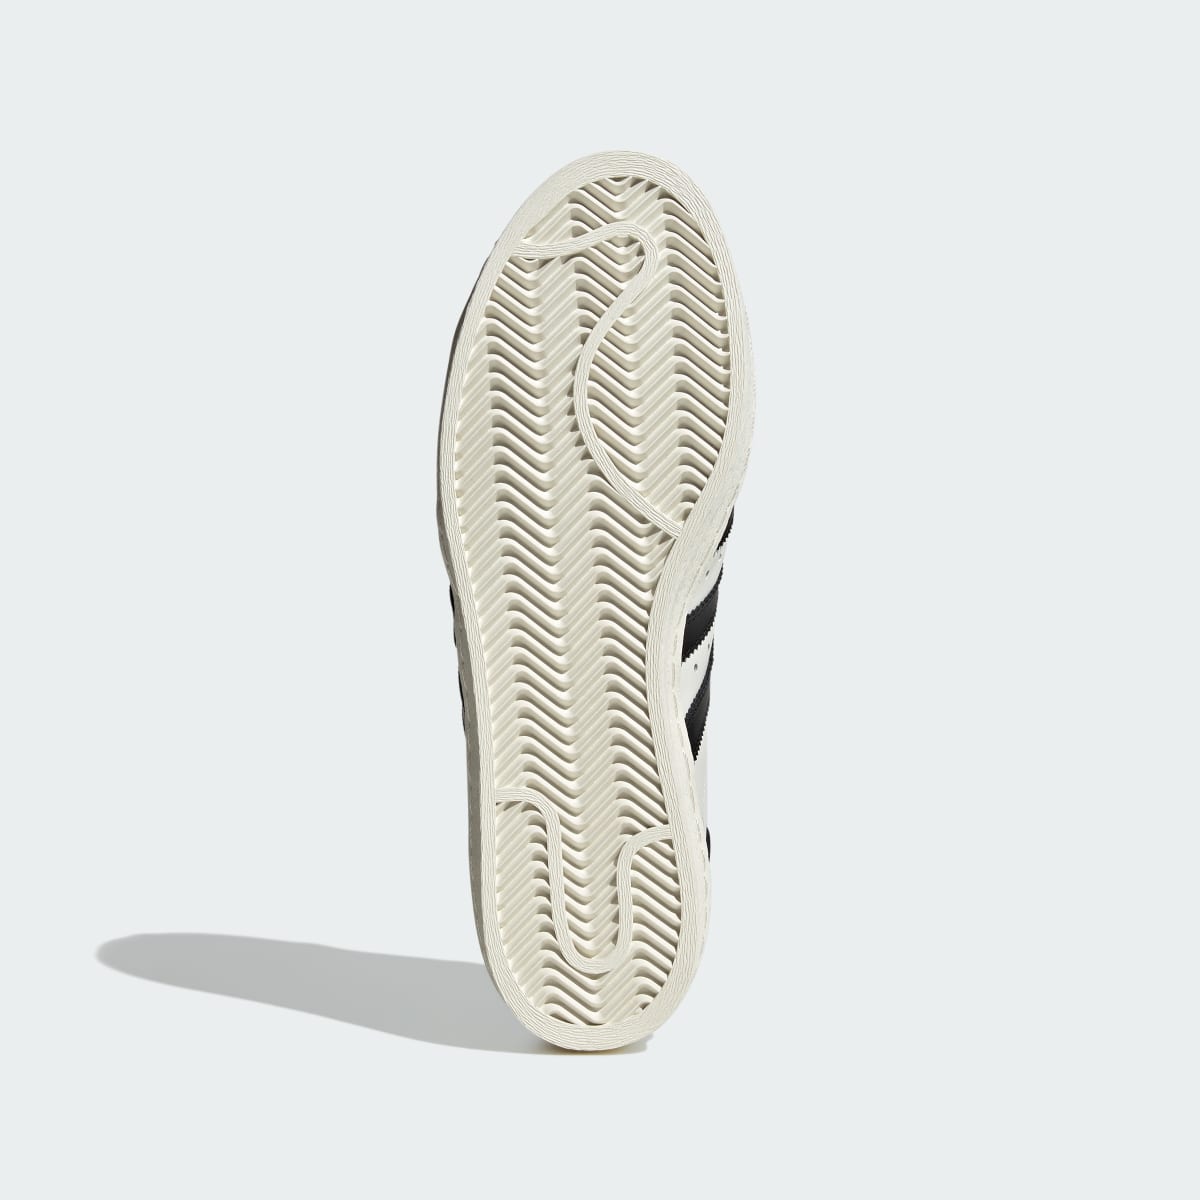 Adidas Superstar 82 Schuh. 4